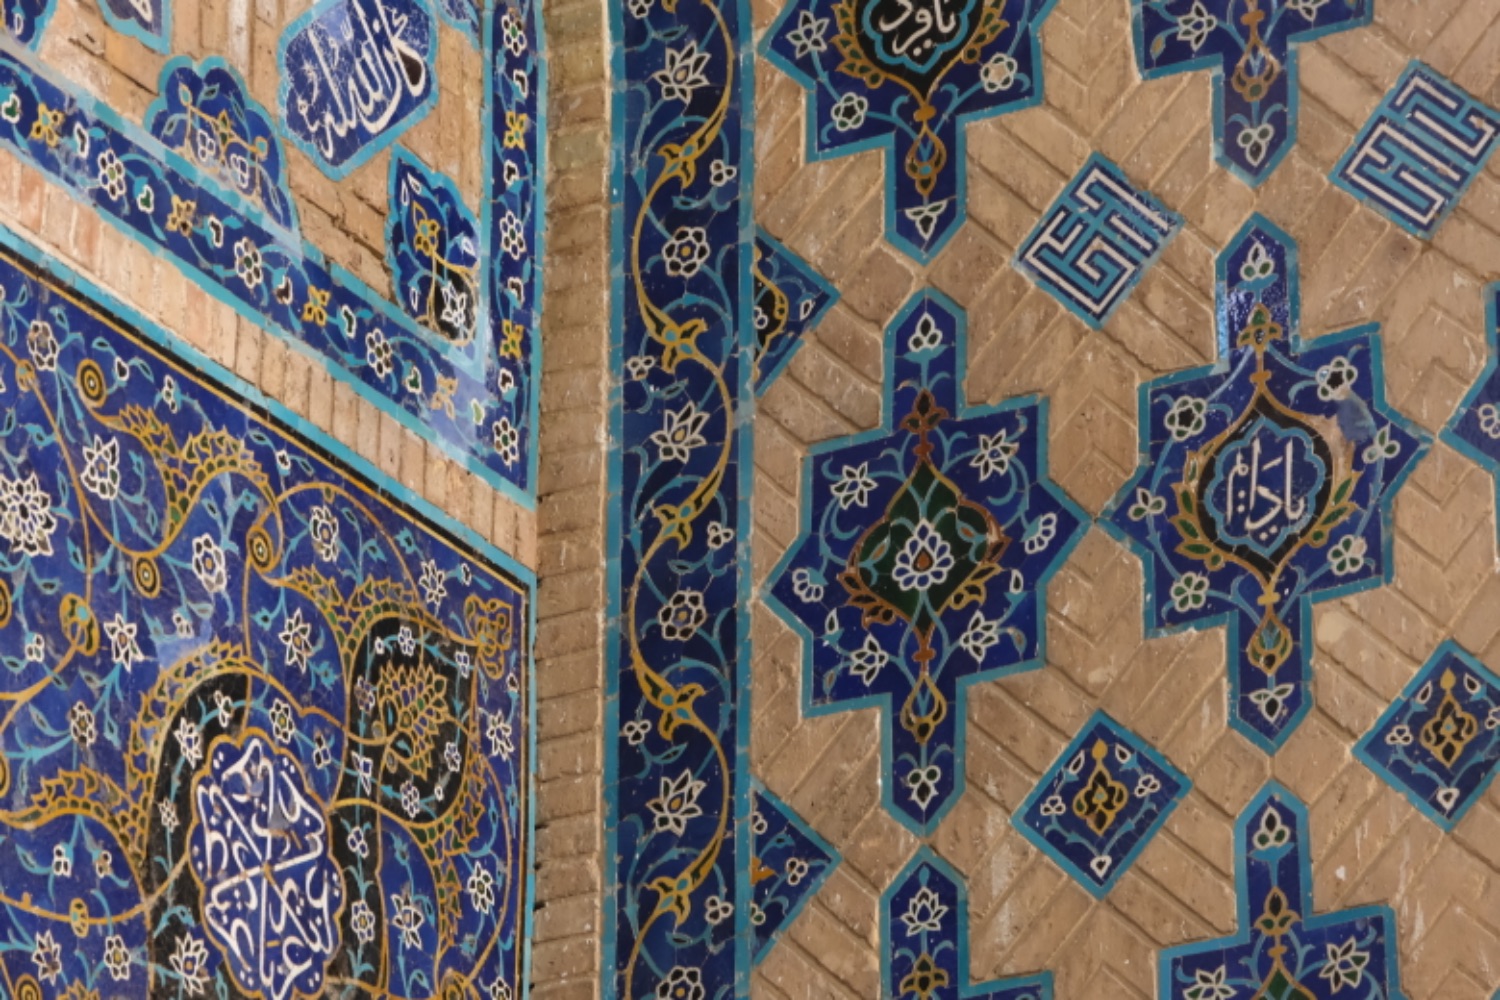 Impressive mosaics inside the Blue Mosque